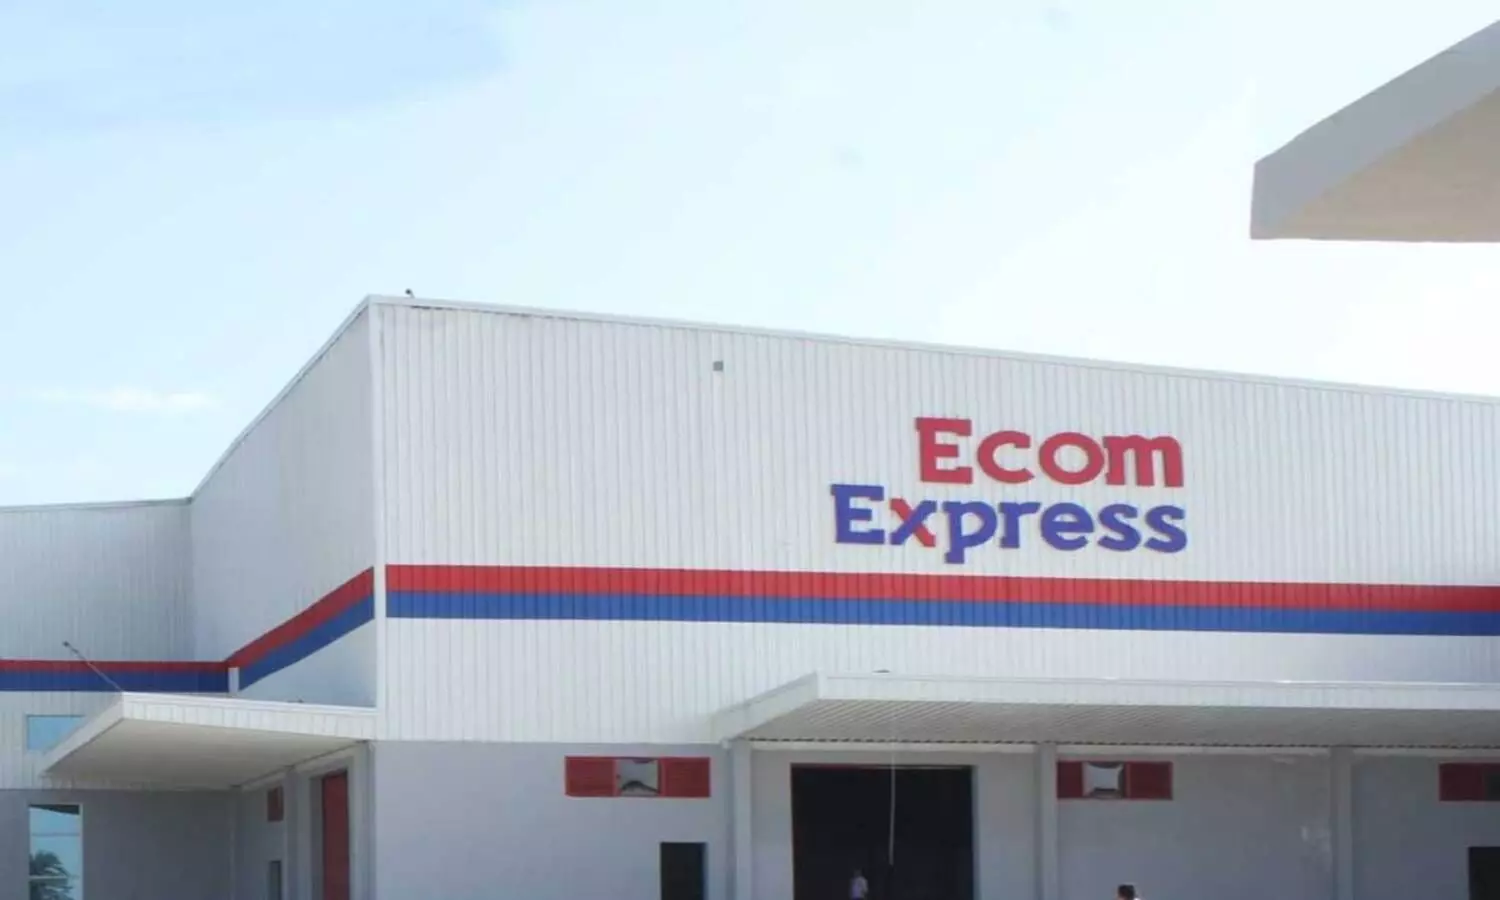 Ecom Express launches part-time job programme